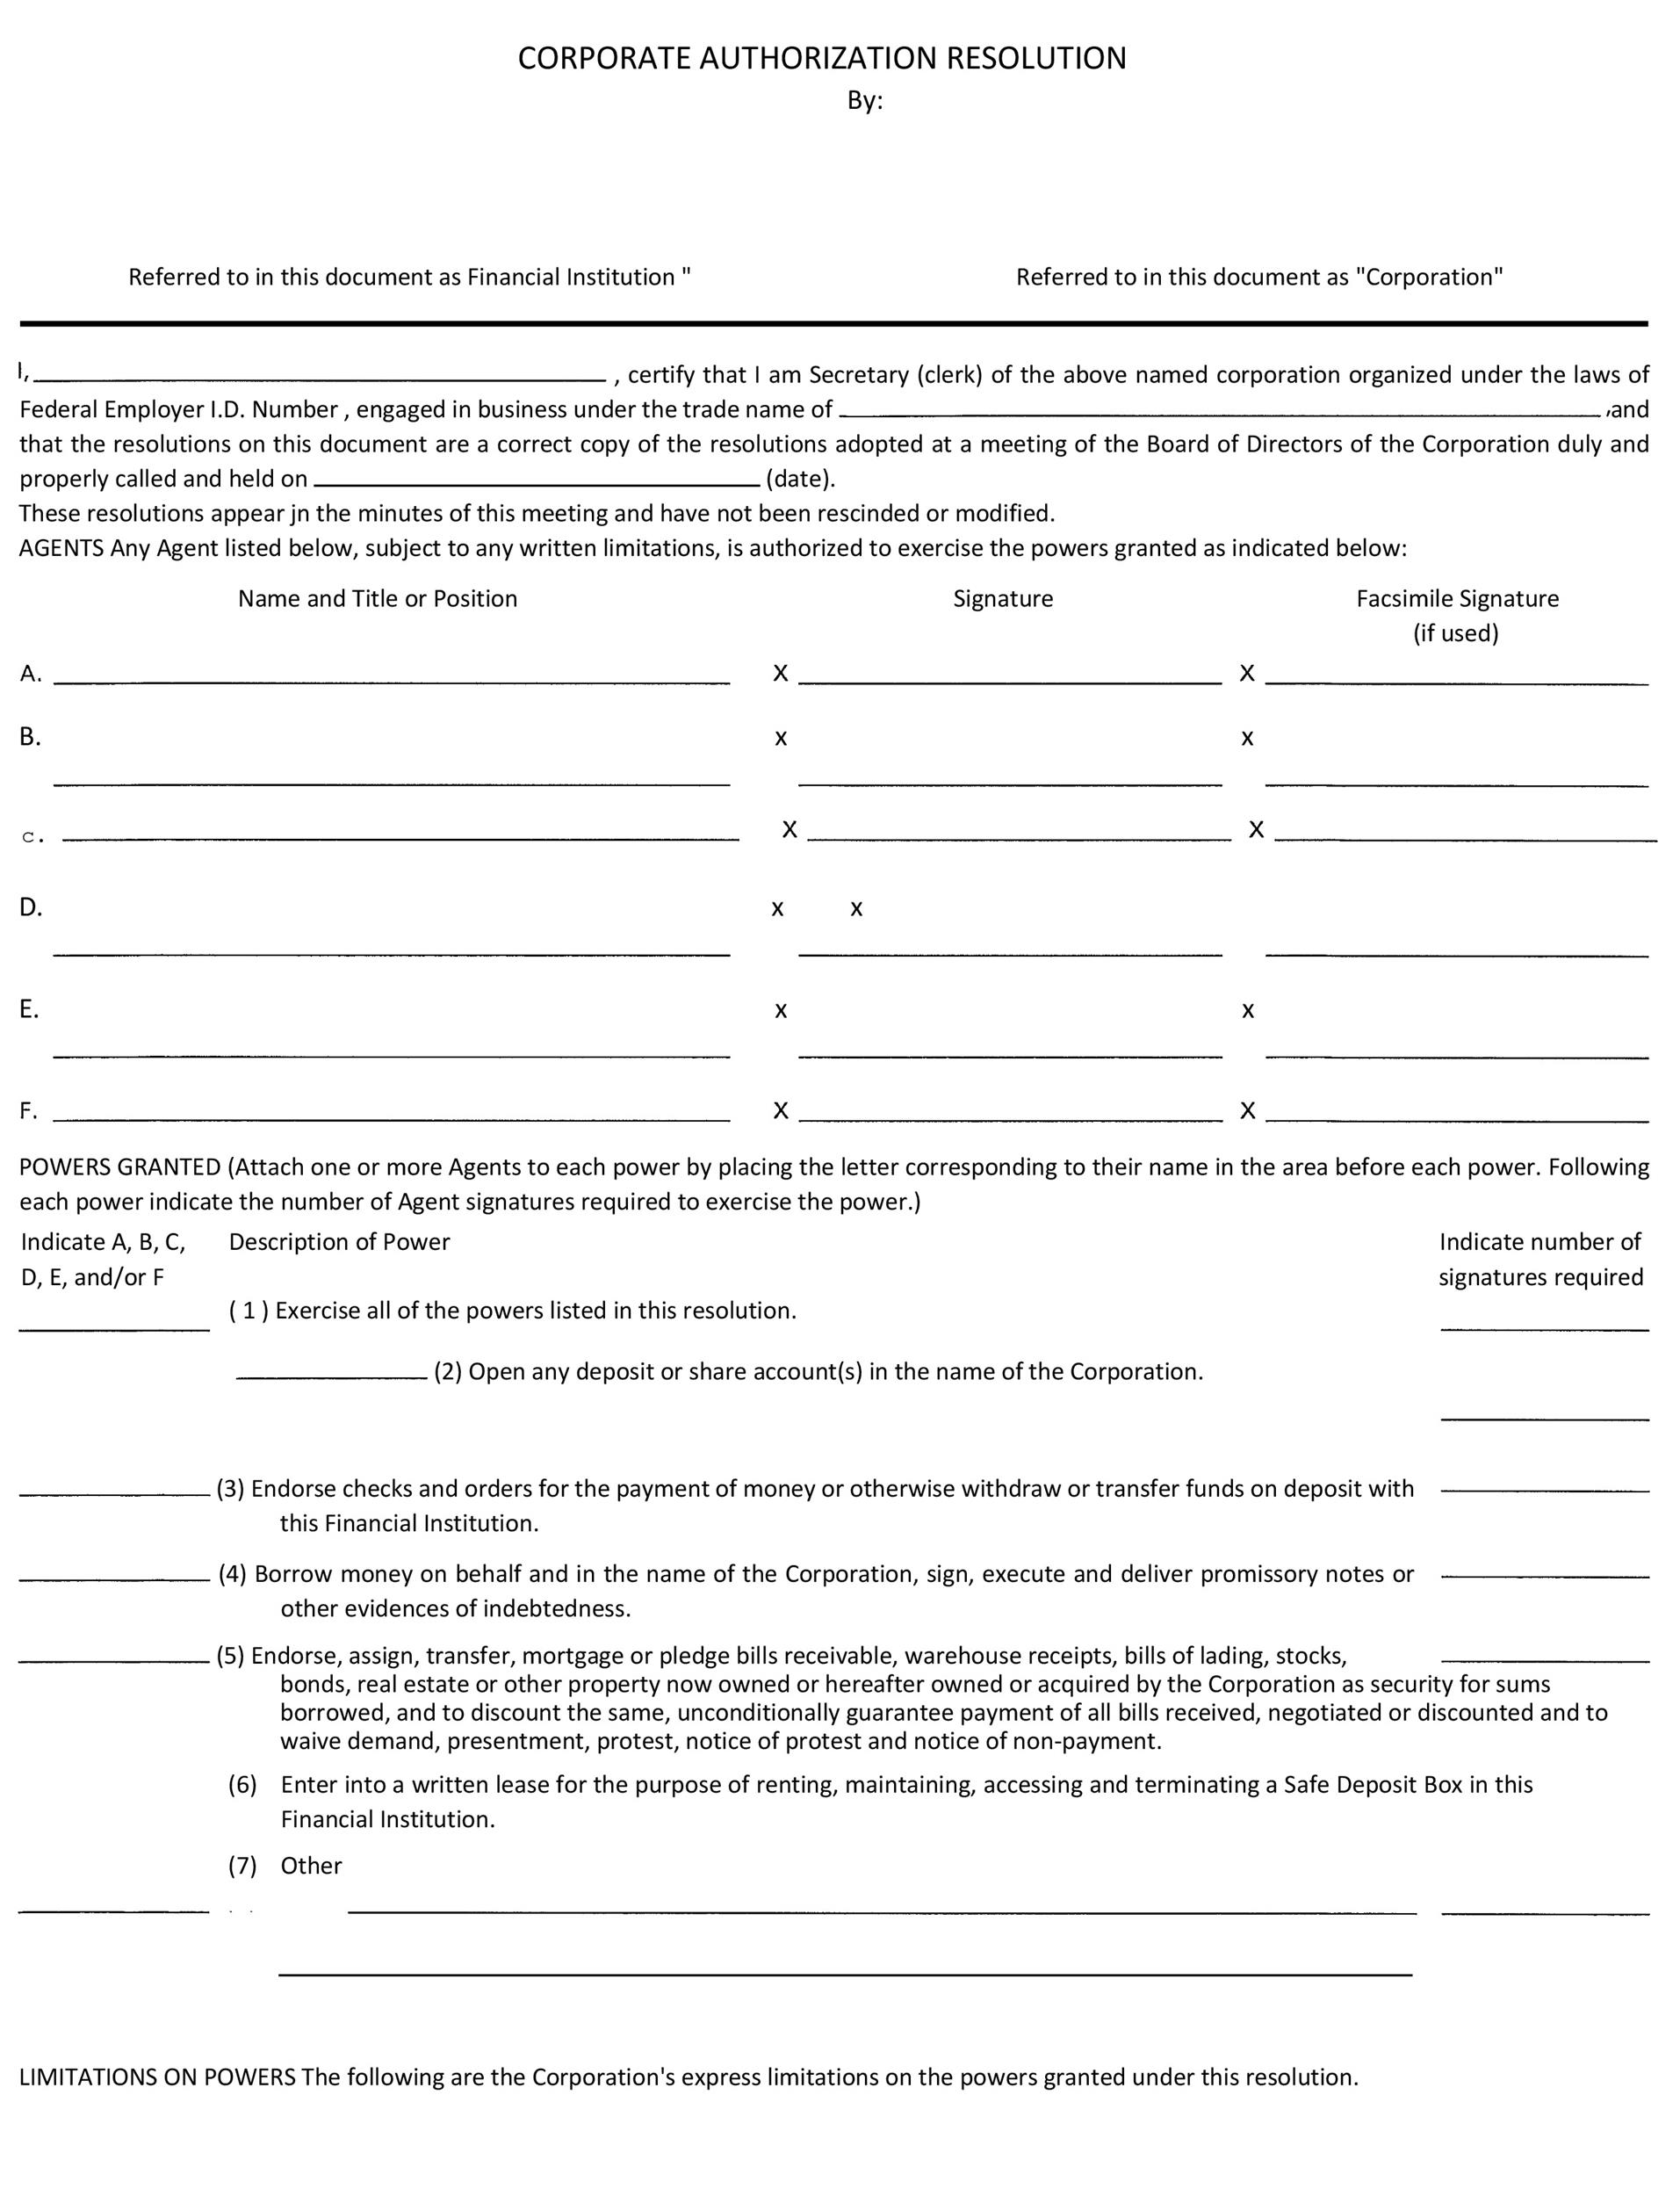 37 Printable Corporate Resolution Forms ᐅ TemplateLab